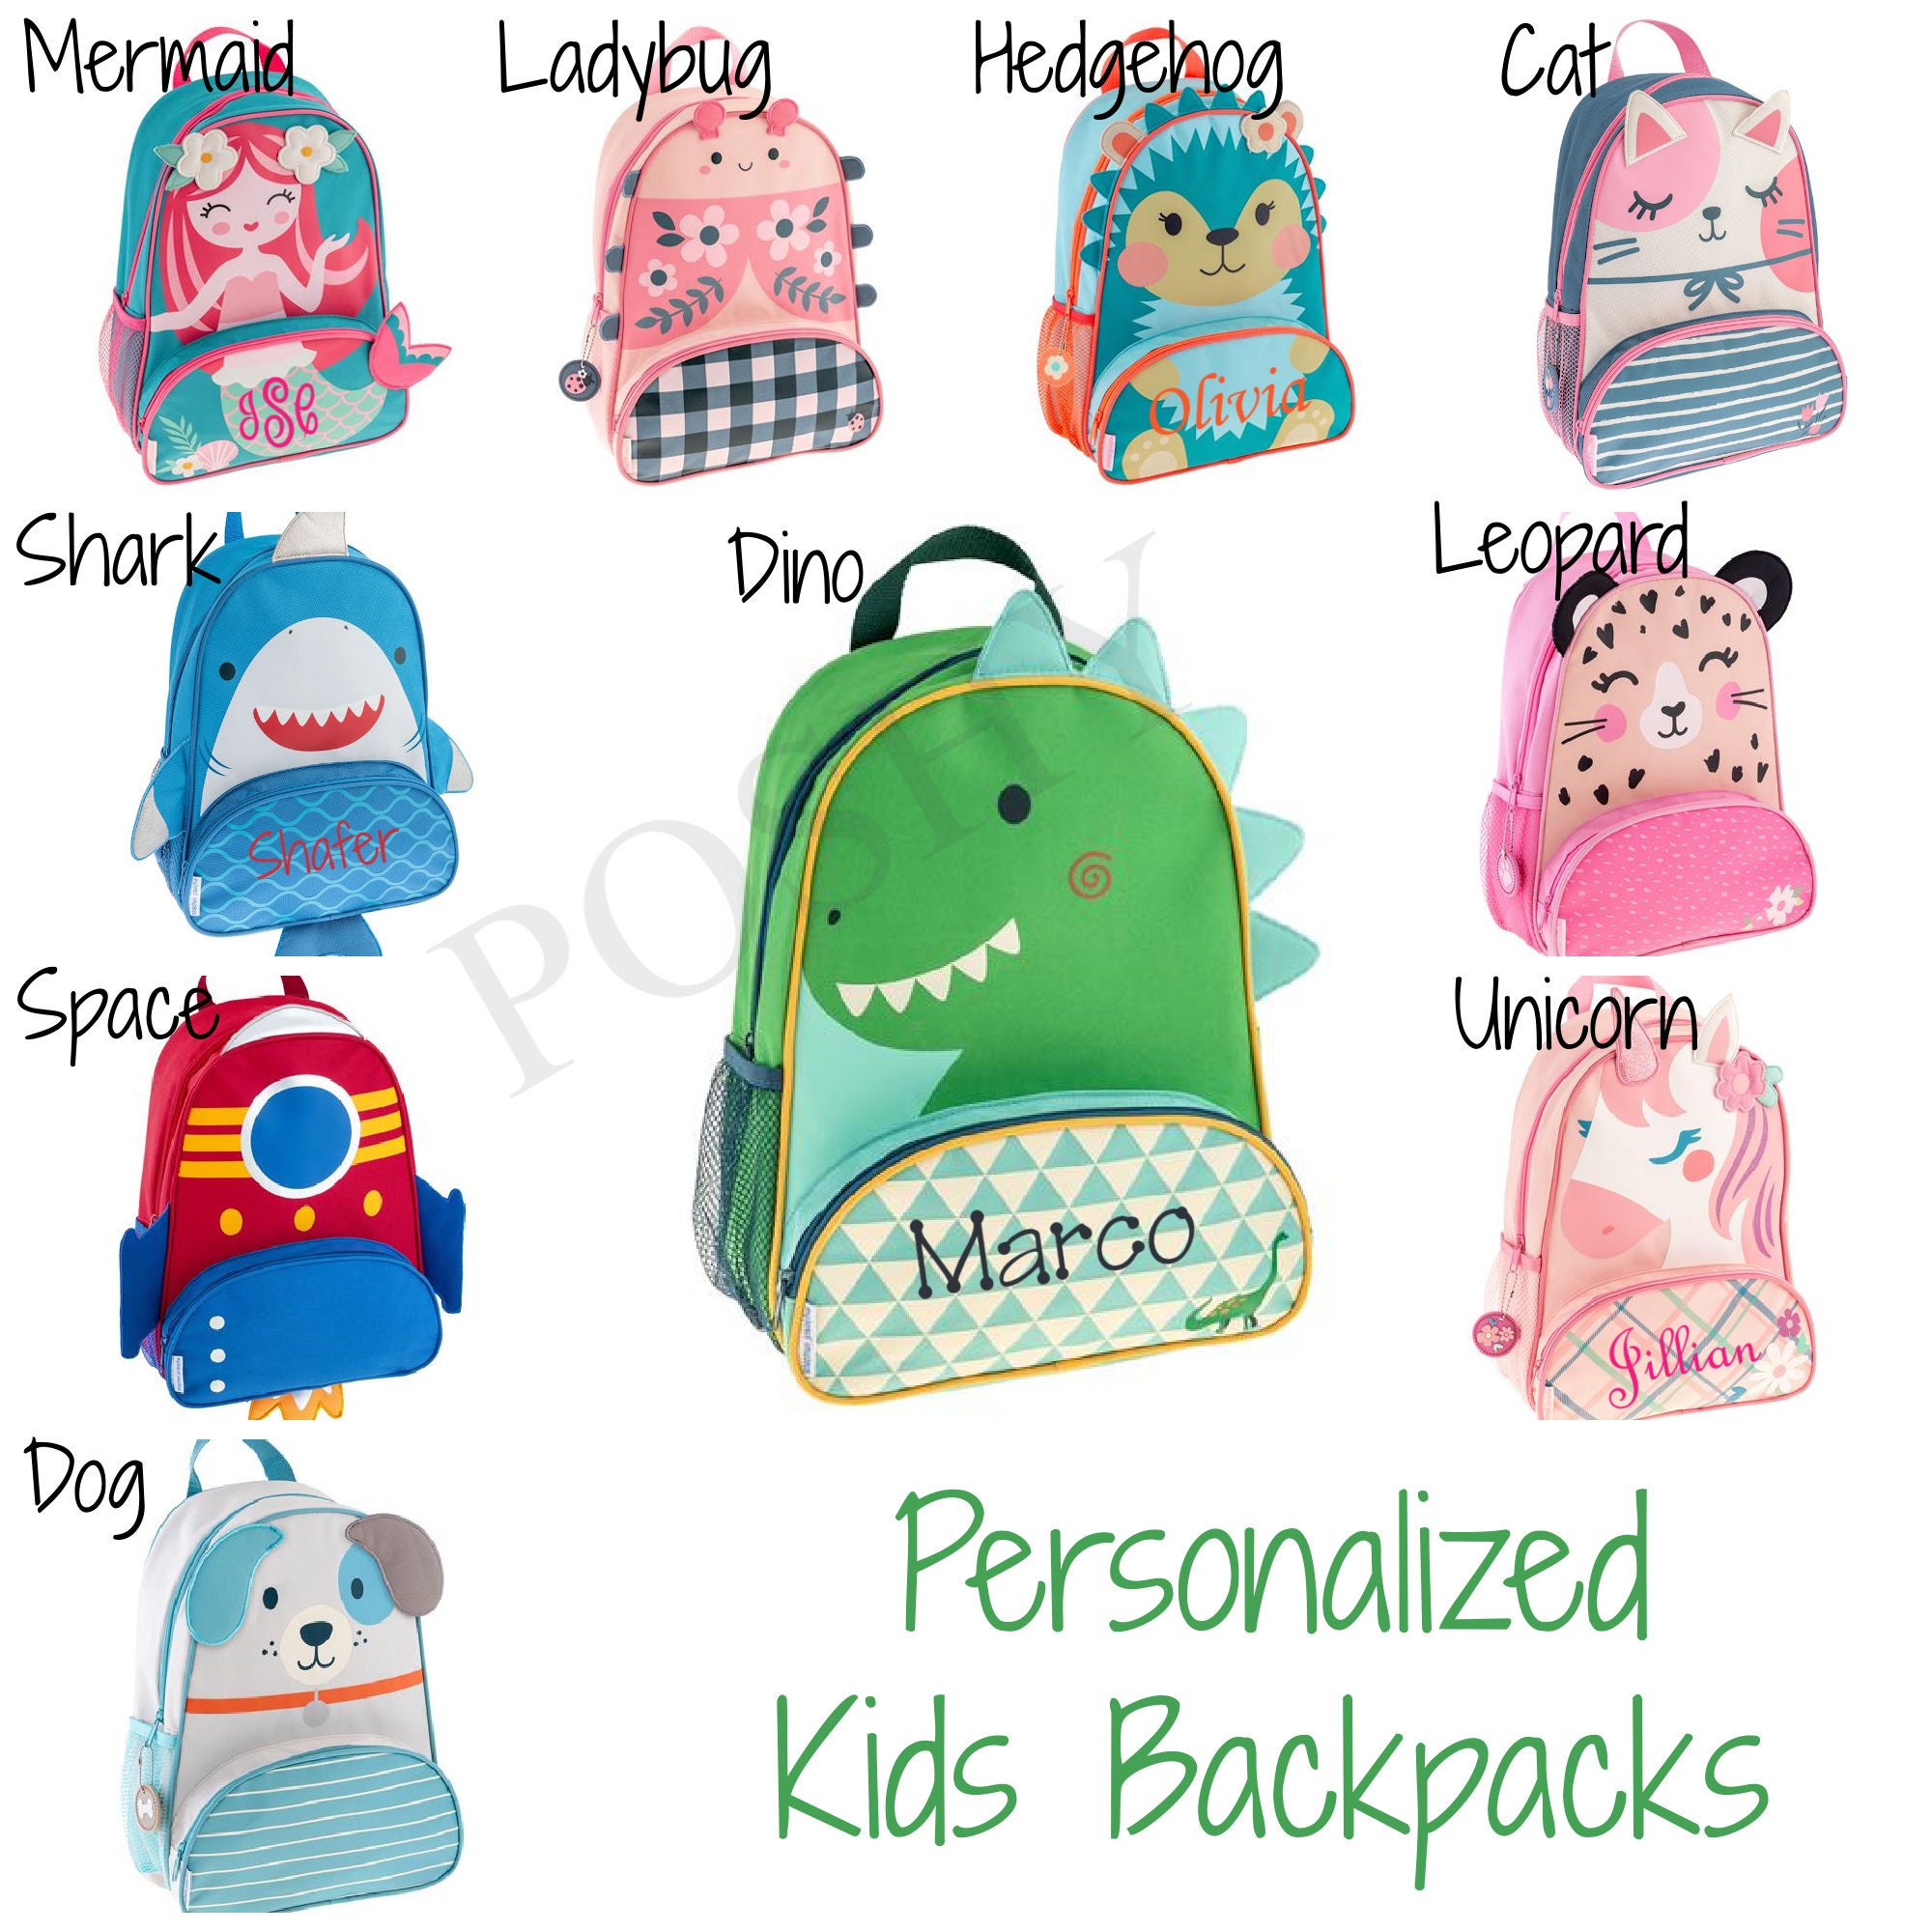 Preschool Backpack for Girls Tollder Cute Small Dinosaur Daycare